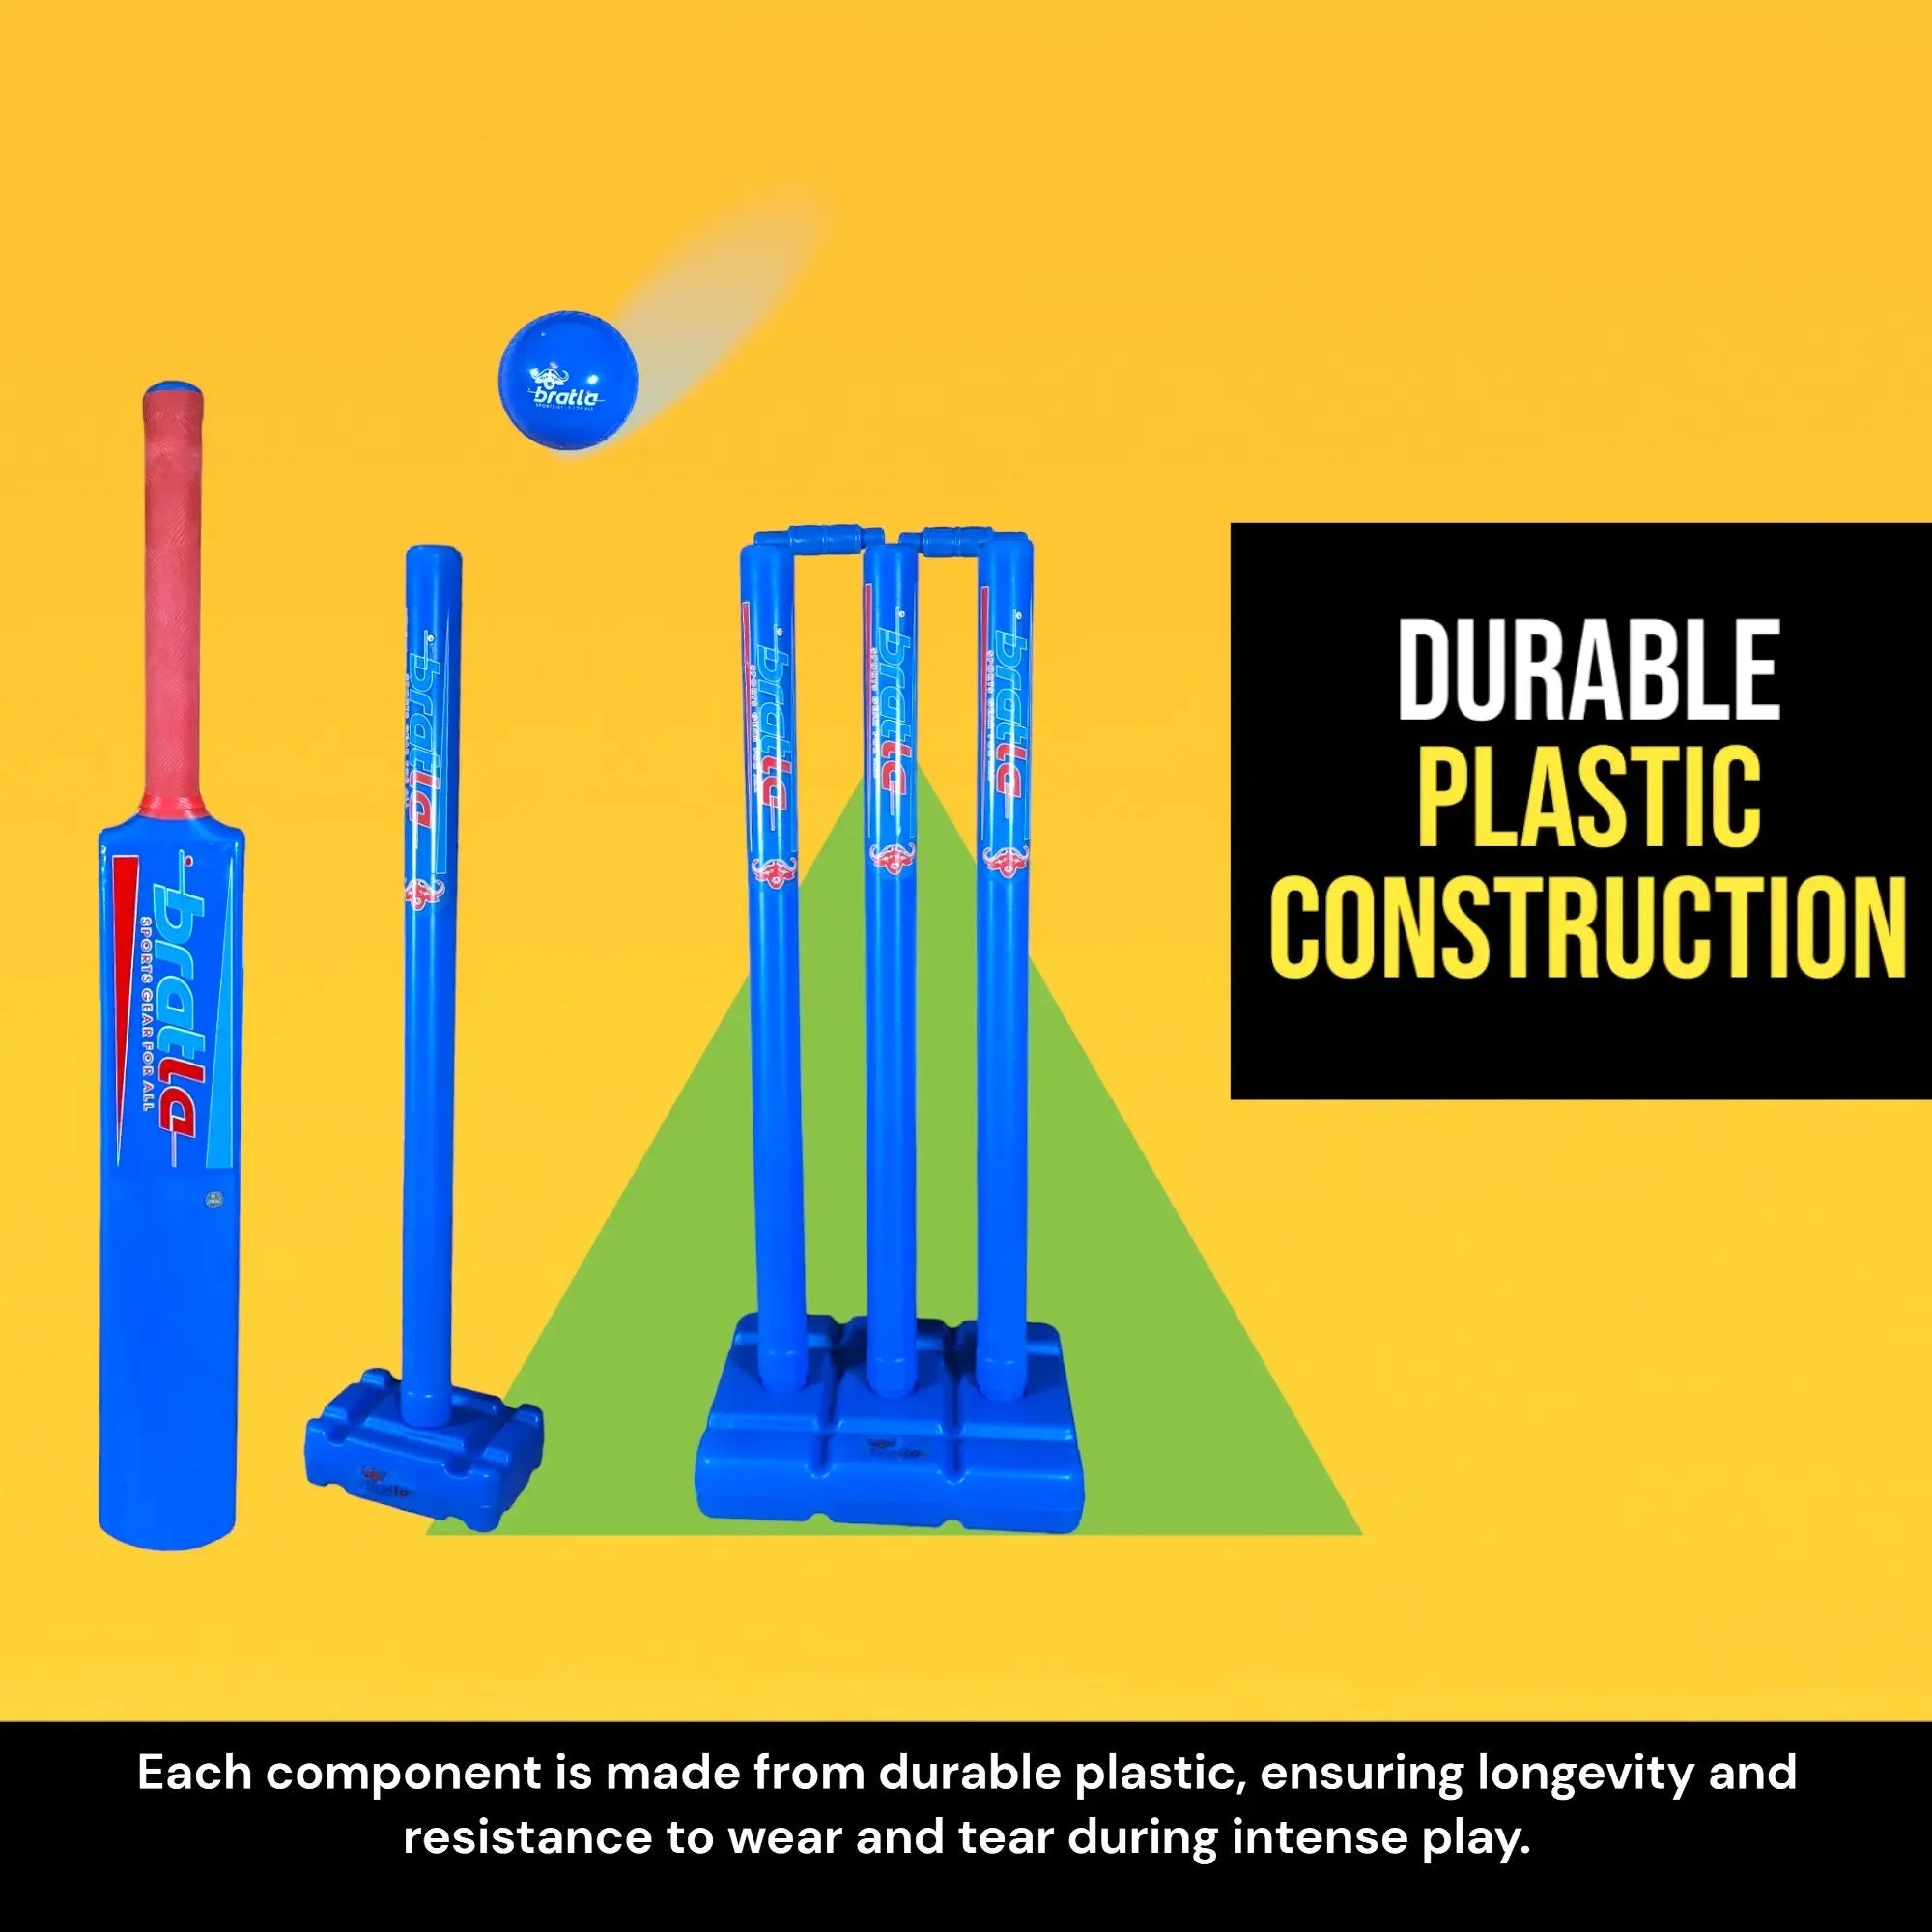 Bratla Cricket Set Size 6 - Blue Color | Includes Bat Wind Ball Stumps and Non-Striker Stump with Plastic Base - BATS - CRICKET SETS